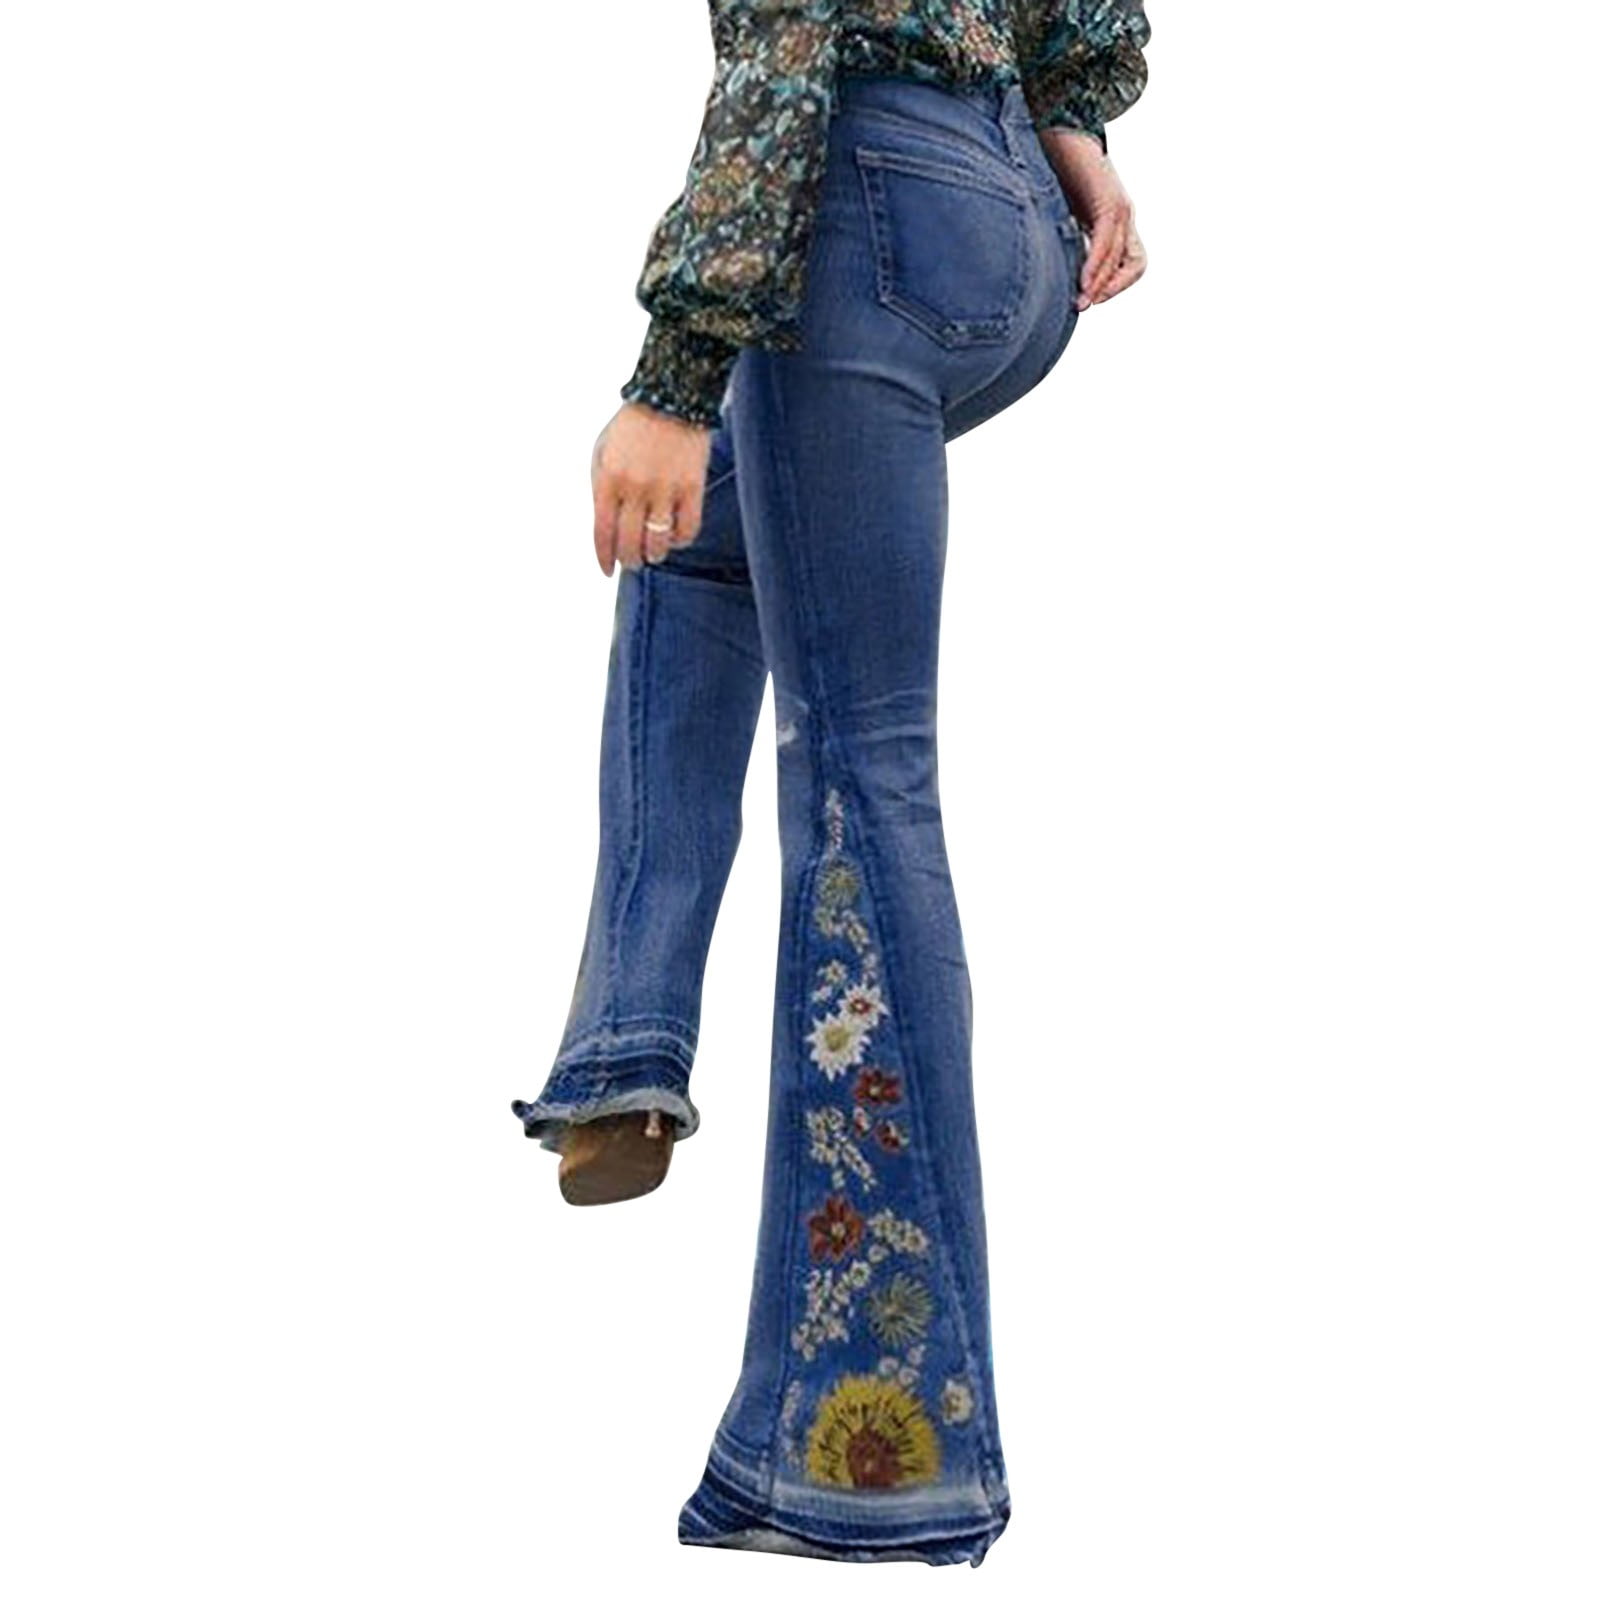 Clio Lace Up Embroidered Pants Women's 16 Boho 70's Style Black Vintage?  EUC | eBay